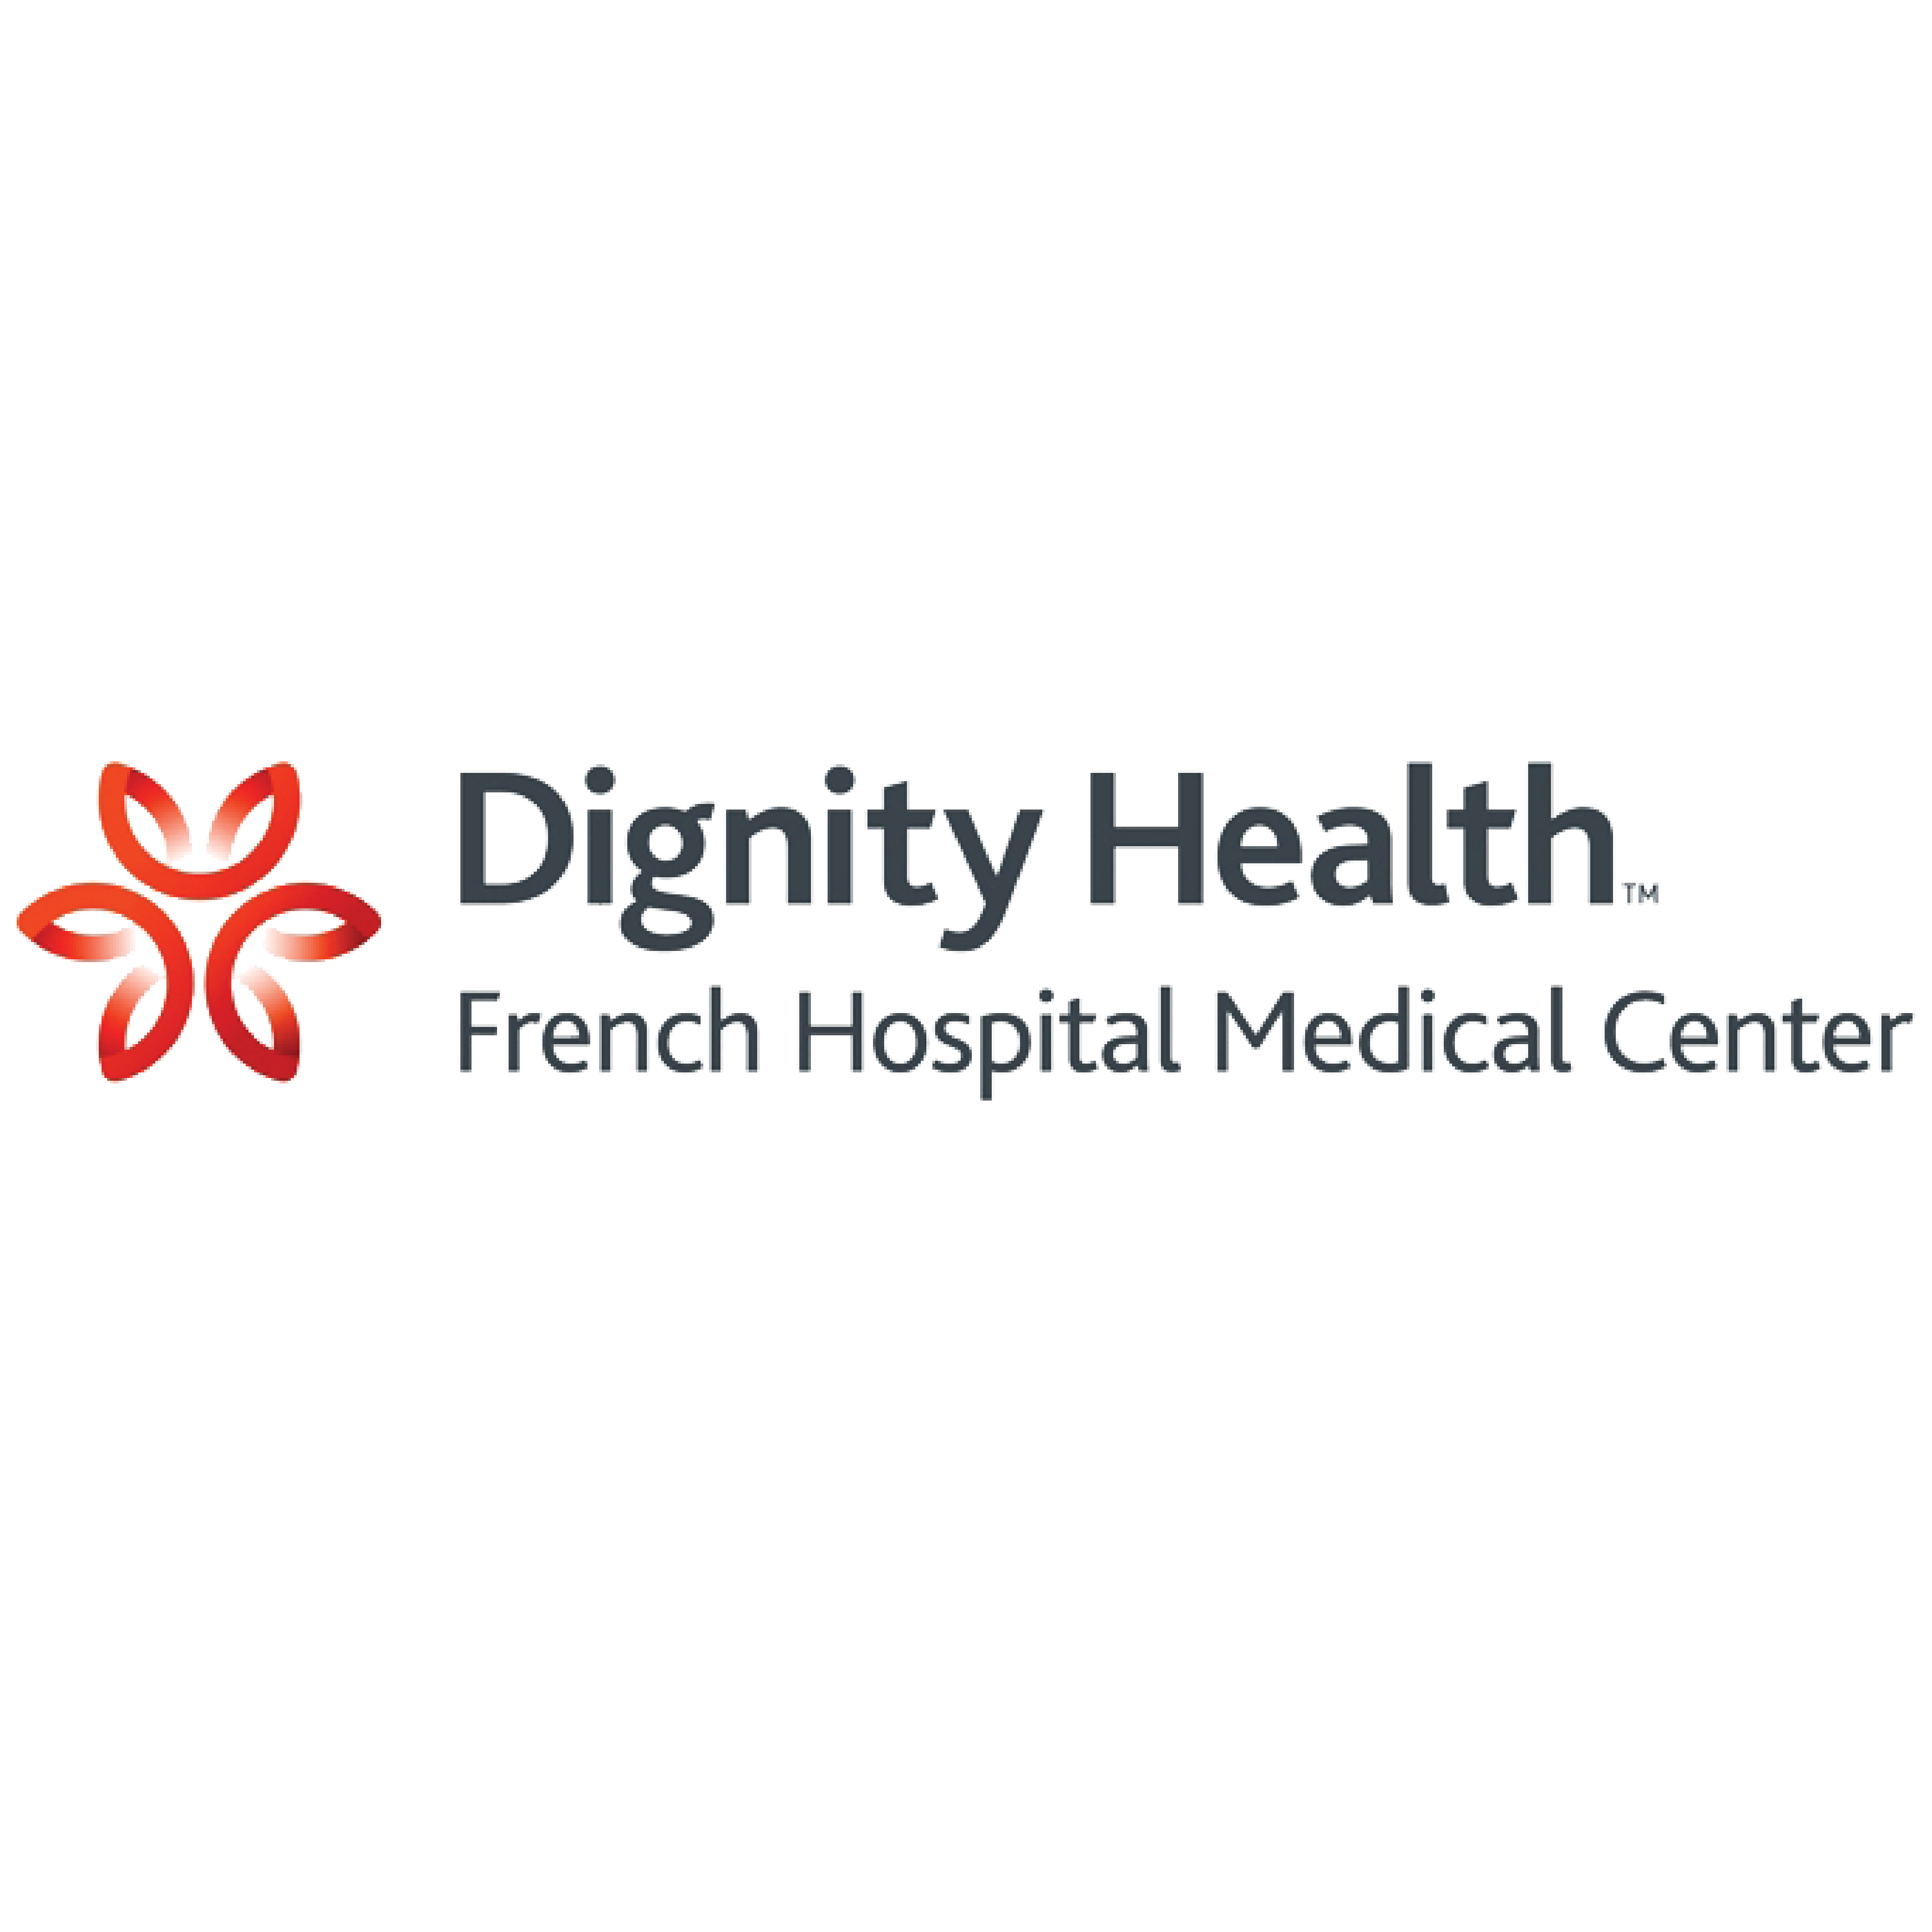 dignity-health-logo